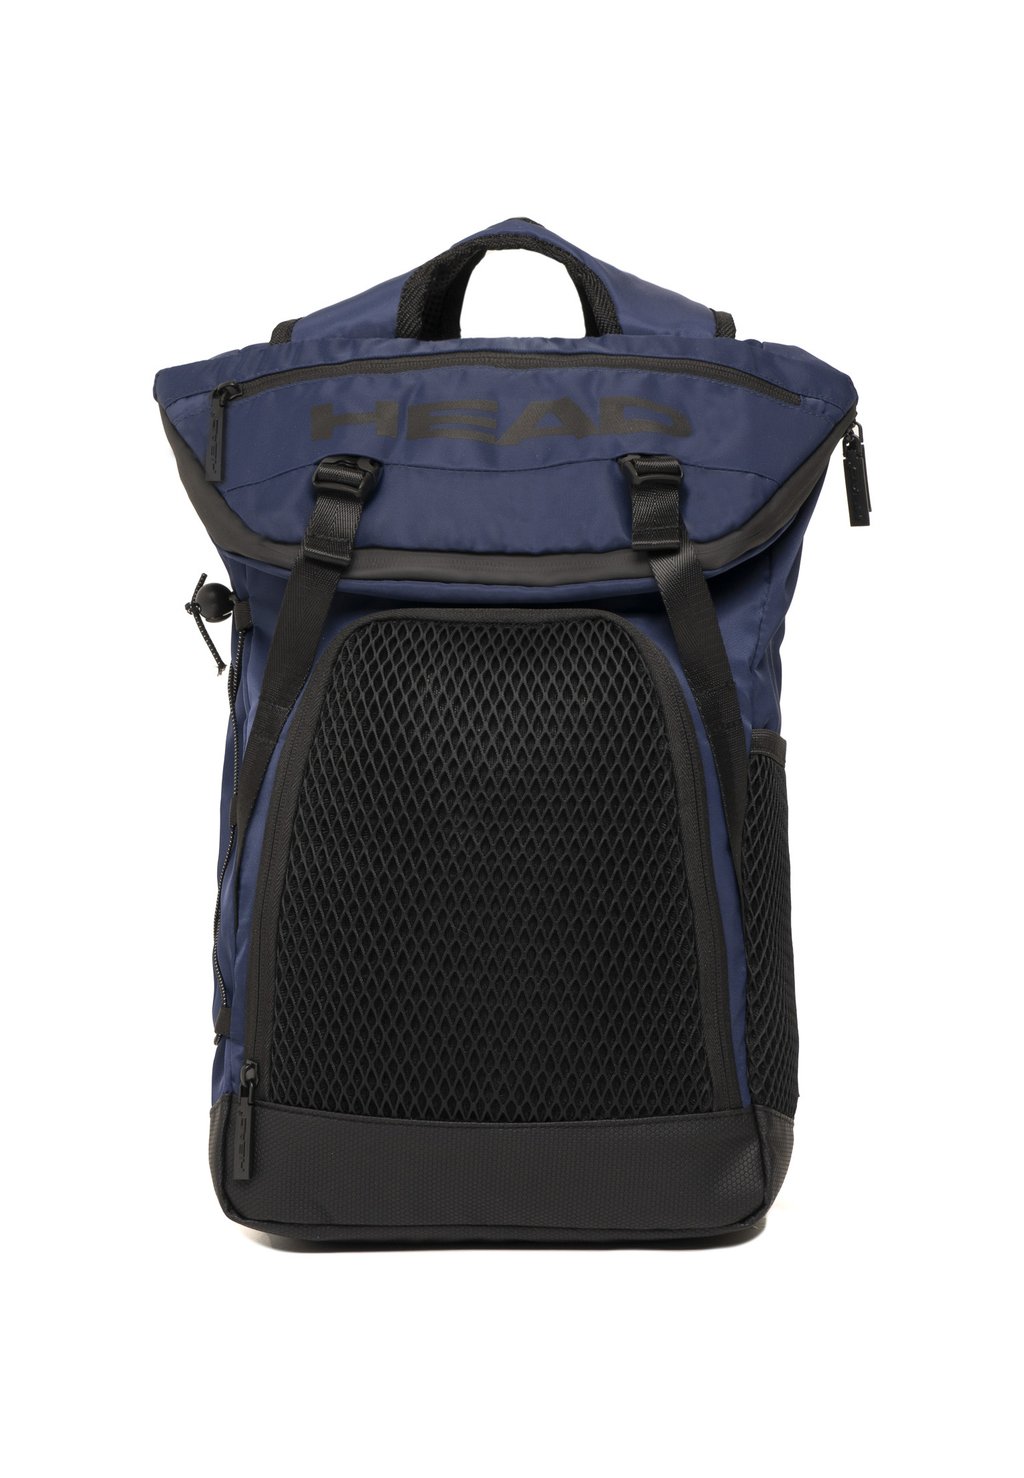 Рюкзак для путешествий Head Net Vertical, темно-синий рюкзак head core черный белый 283421 bkwh